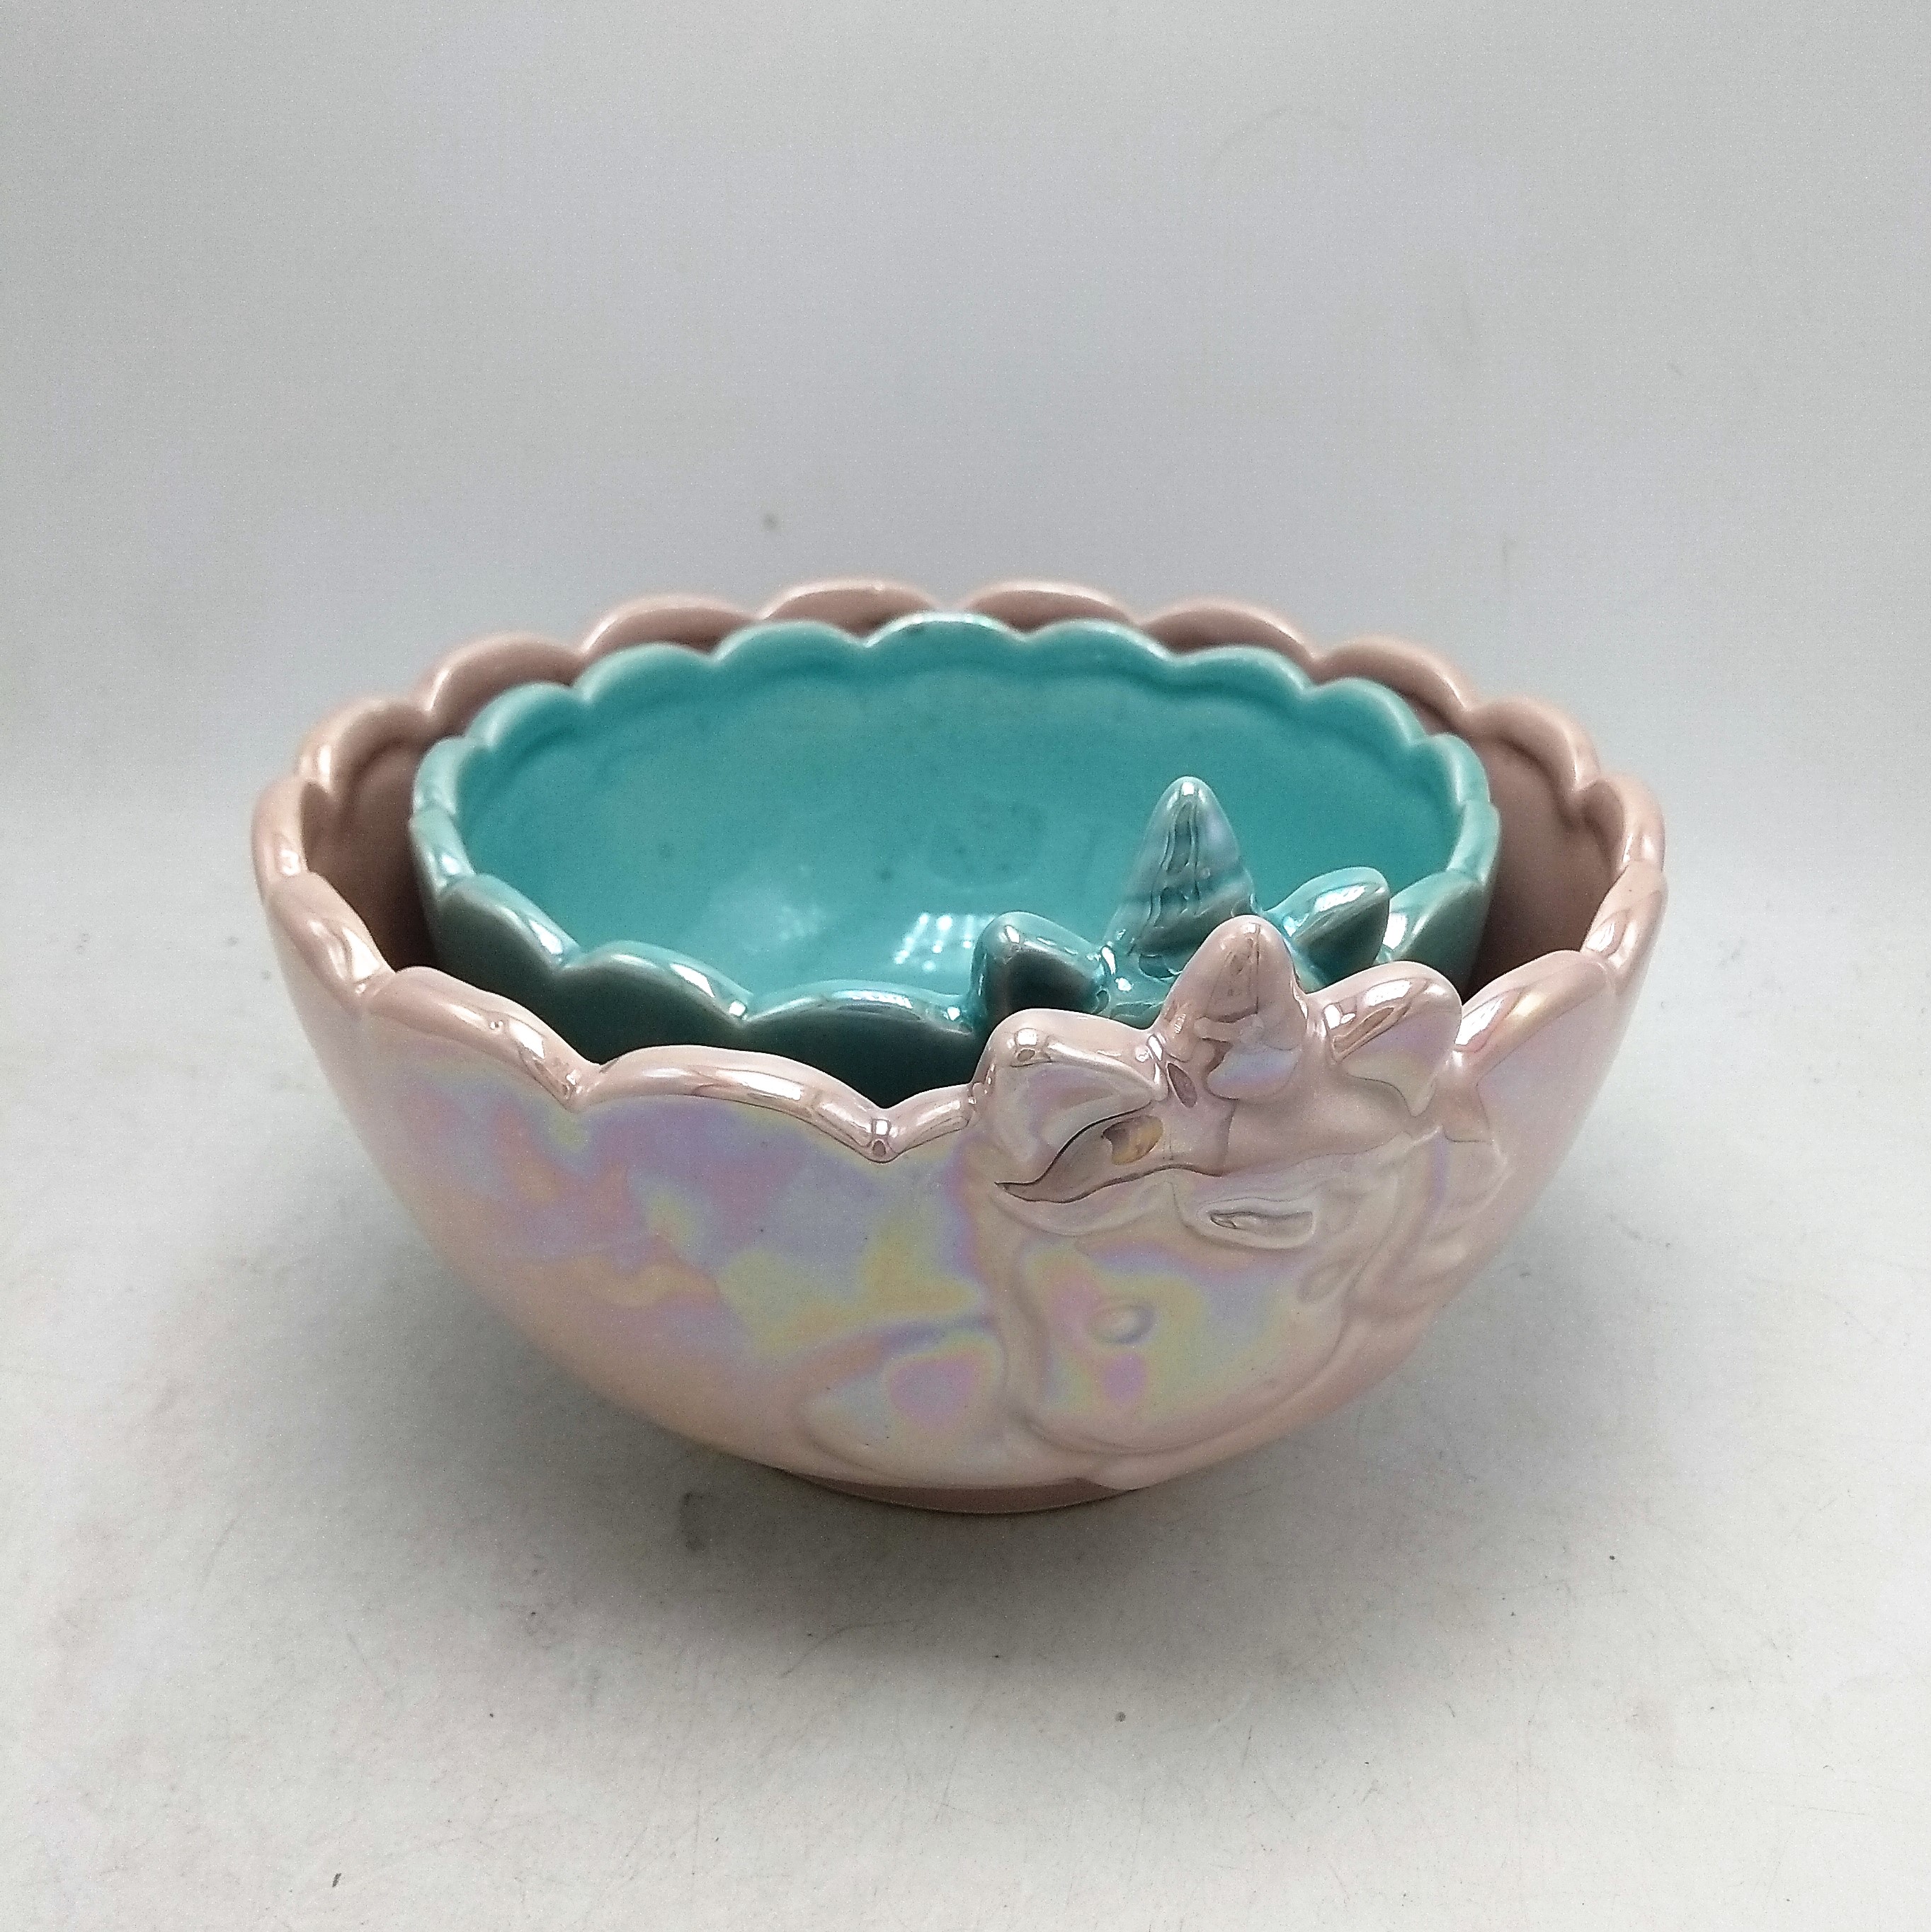 Pink and blue plated Ceramic unicorn snack bowl,decorative ceramic bowls